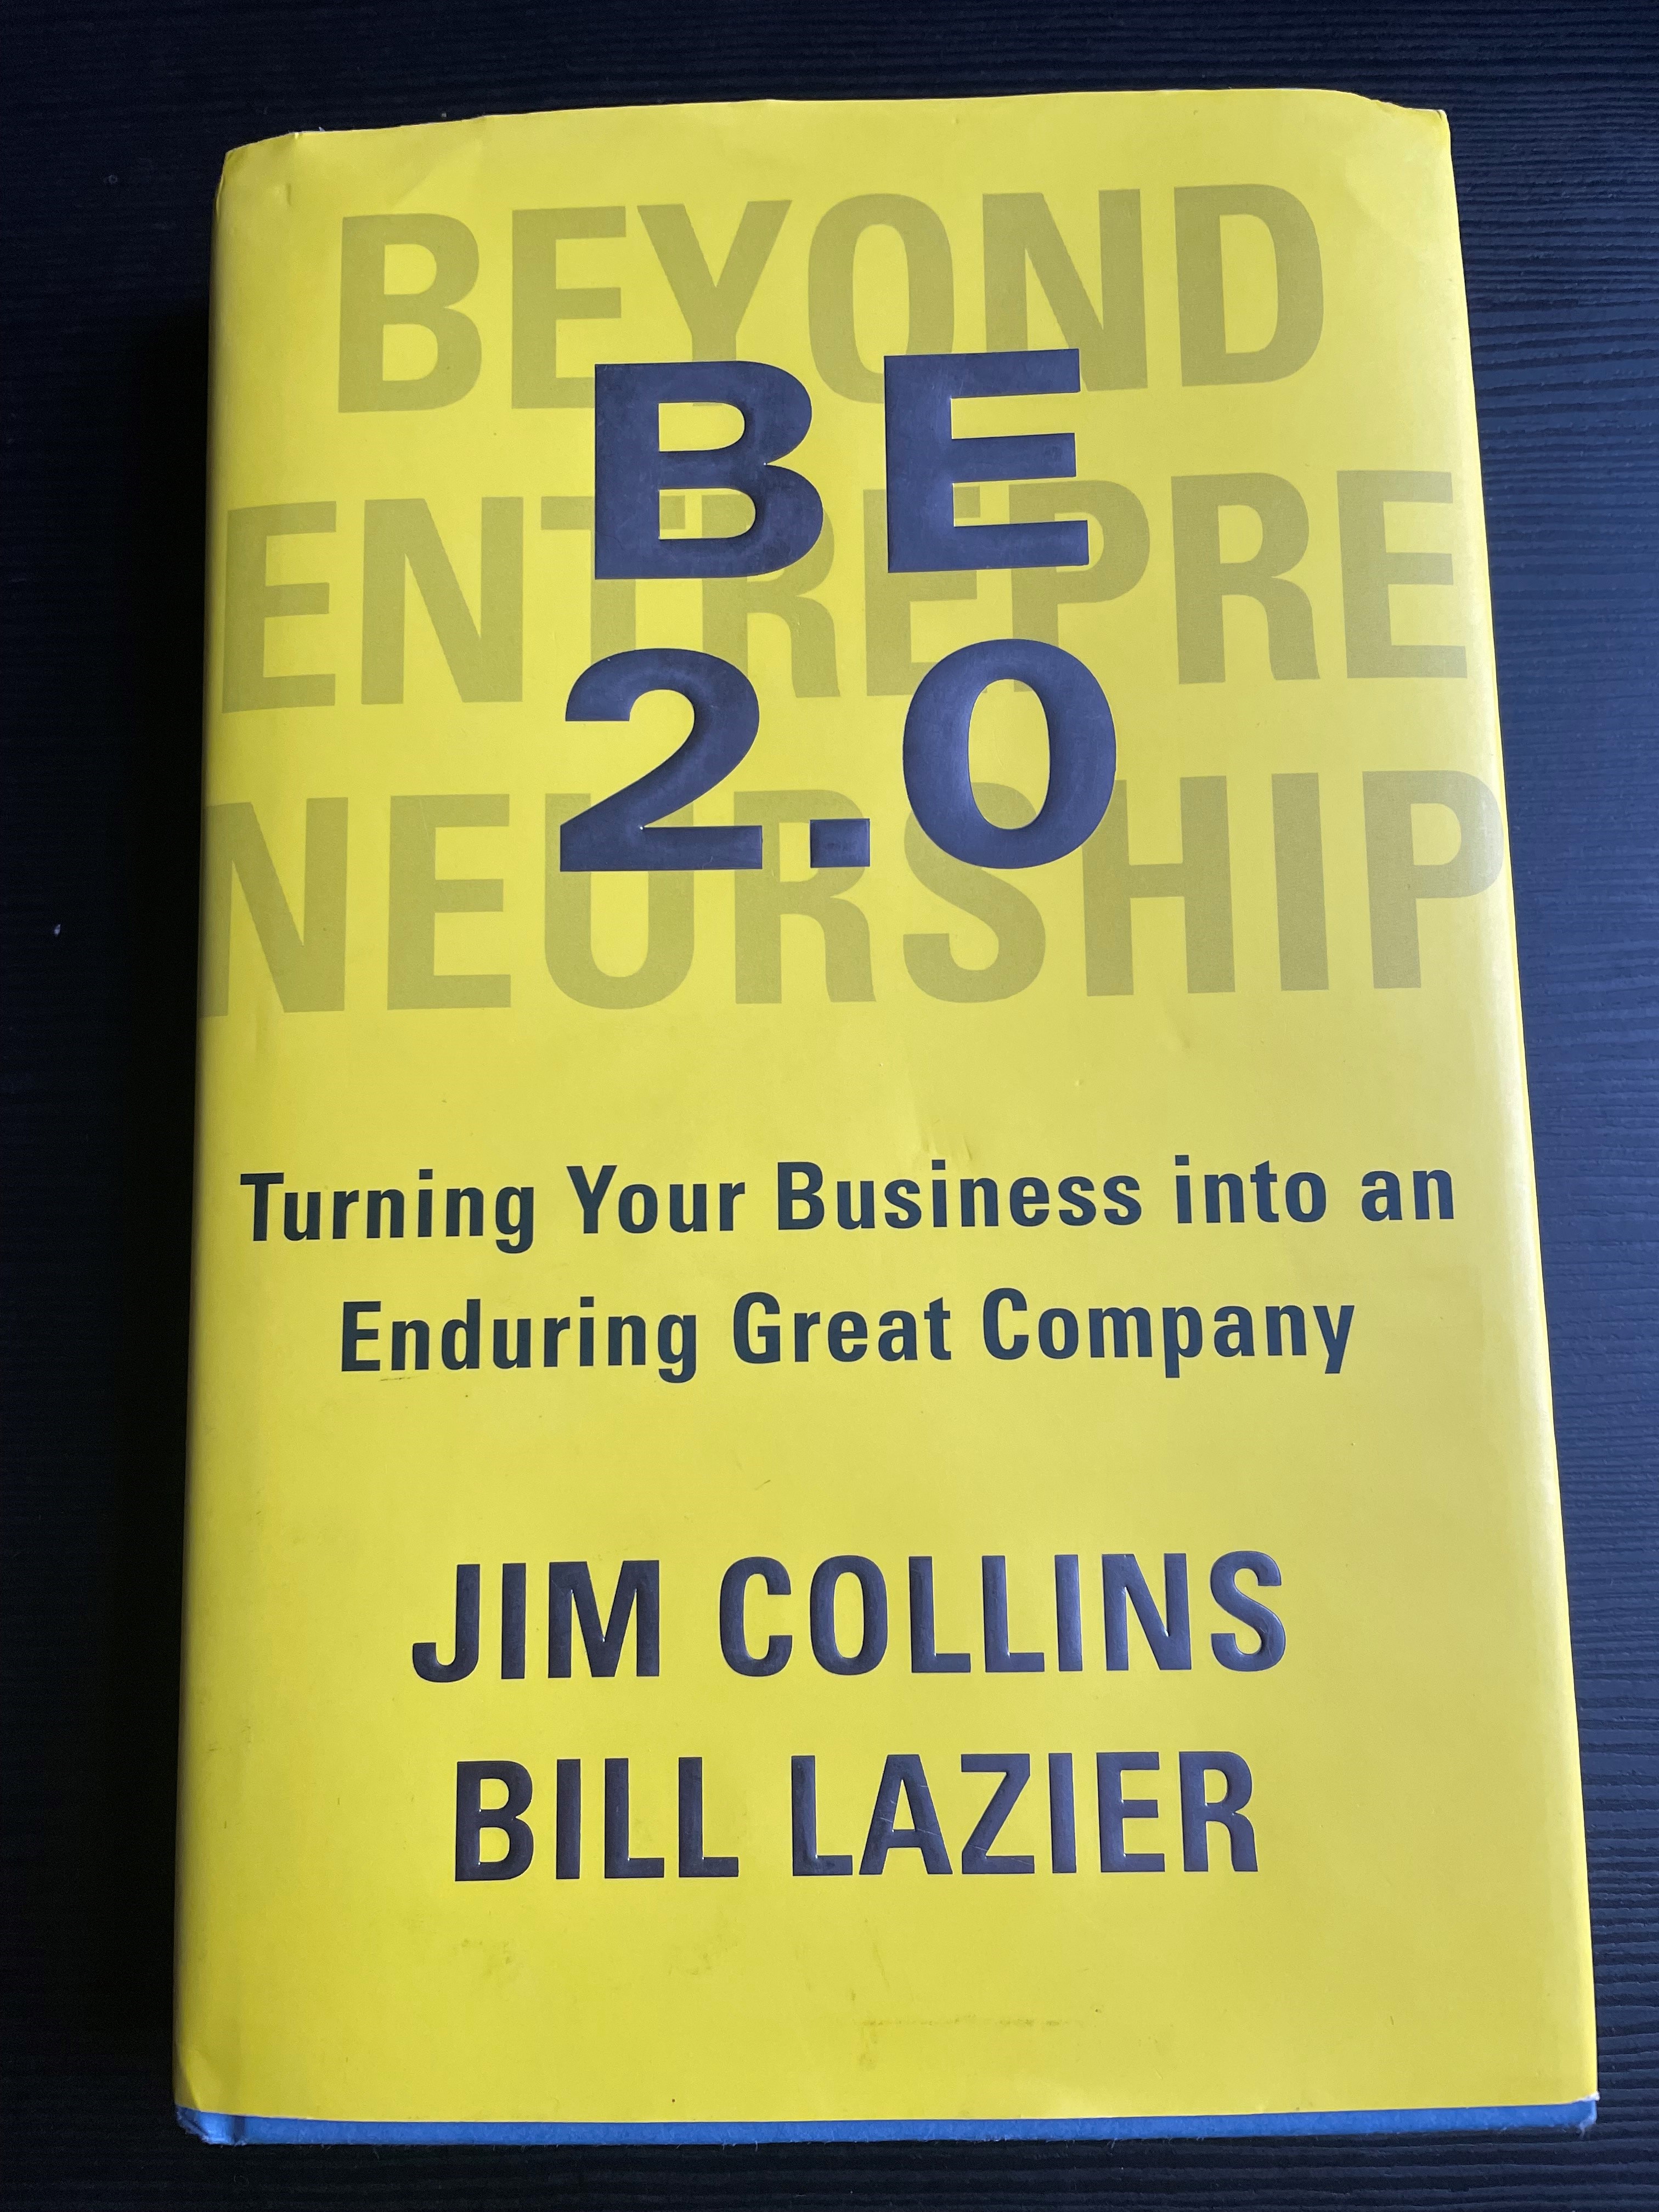 Jim Collins - Books - BE 2.0